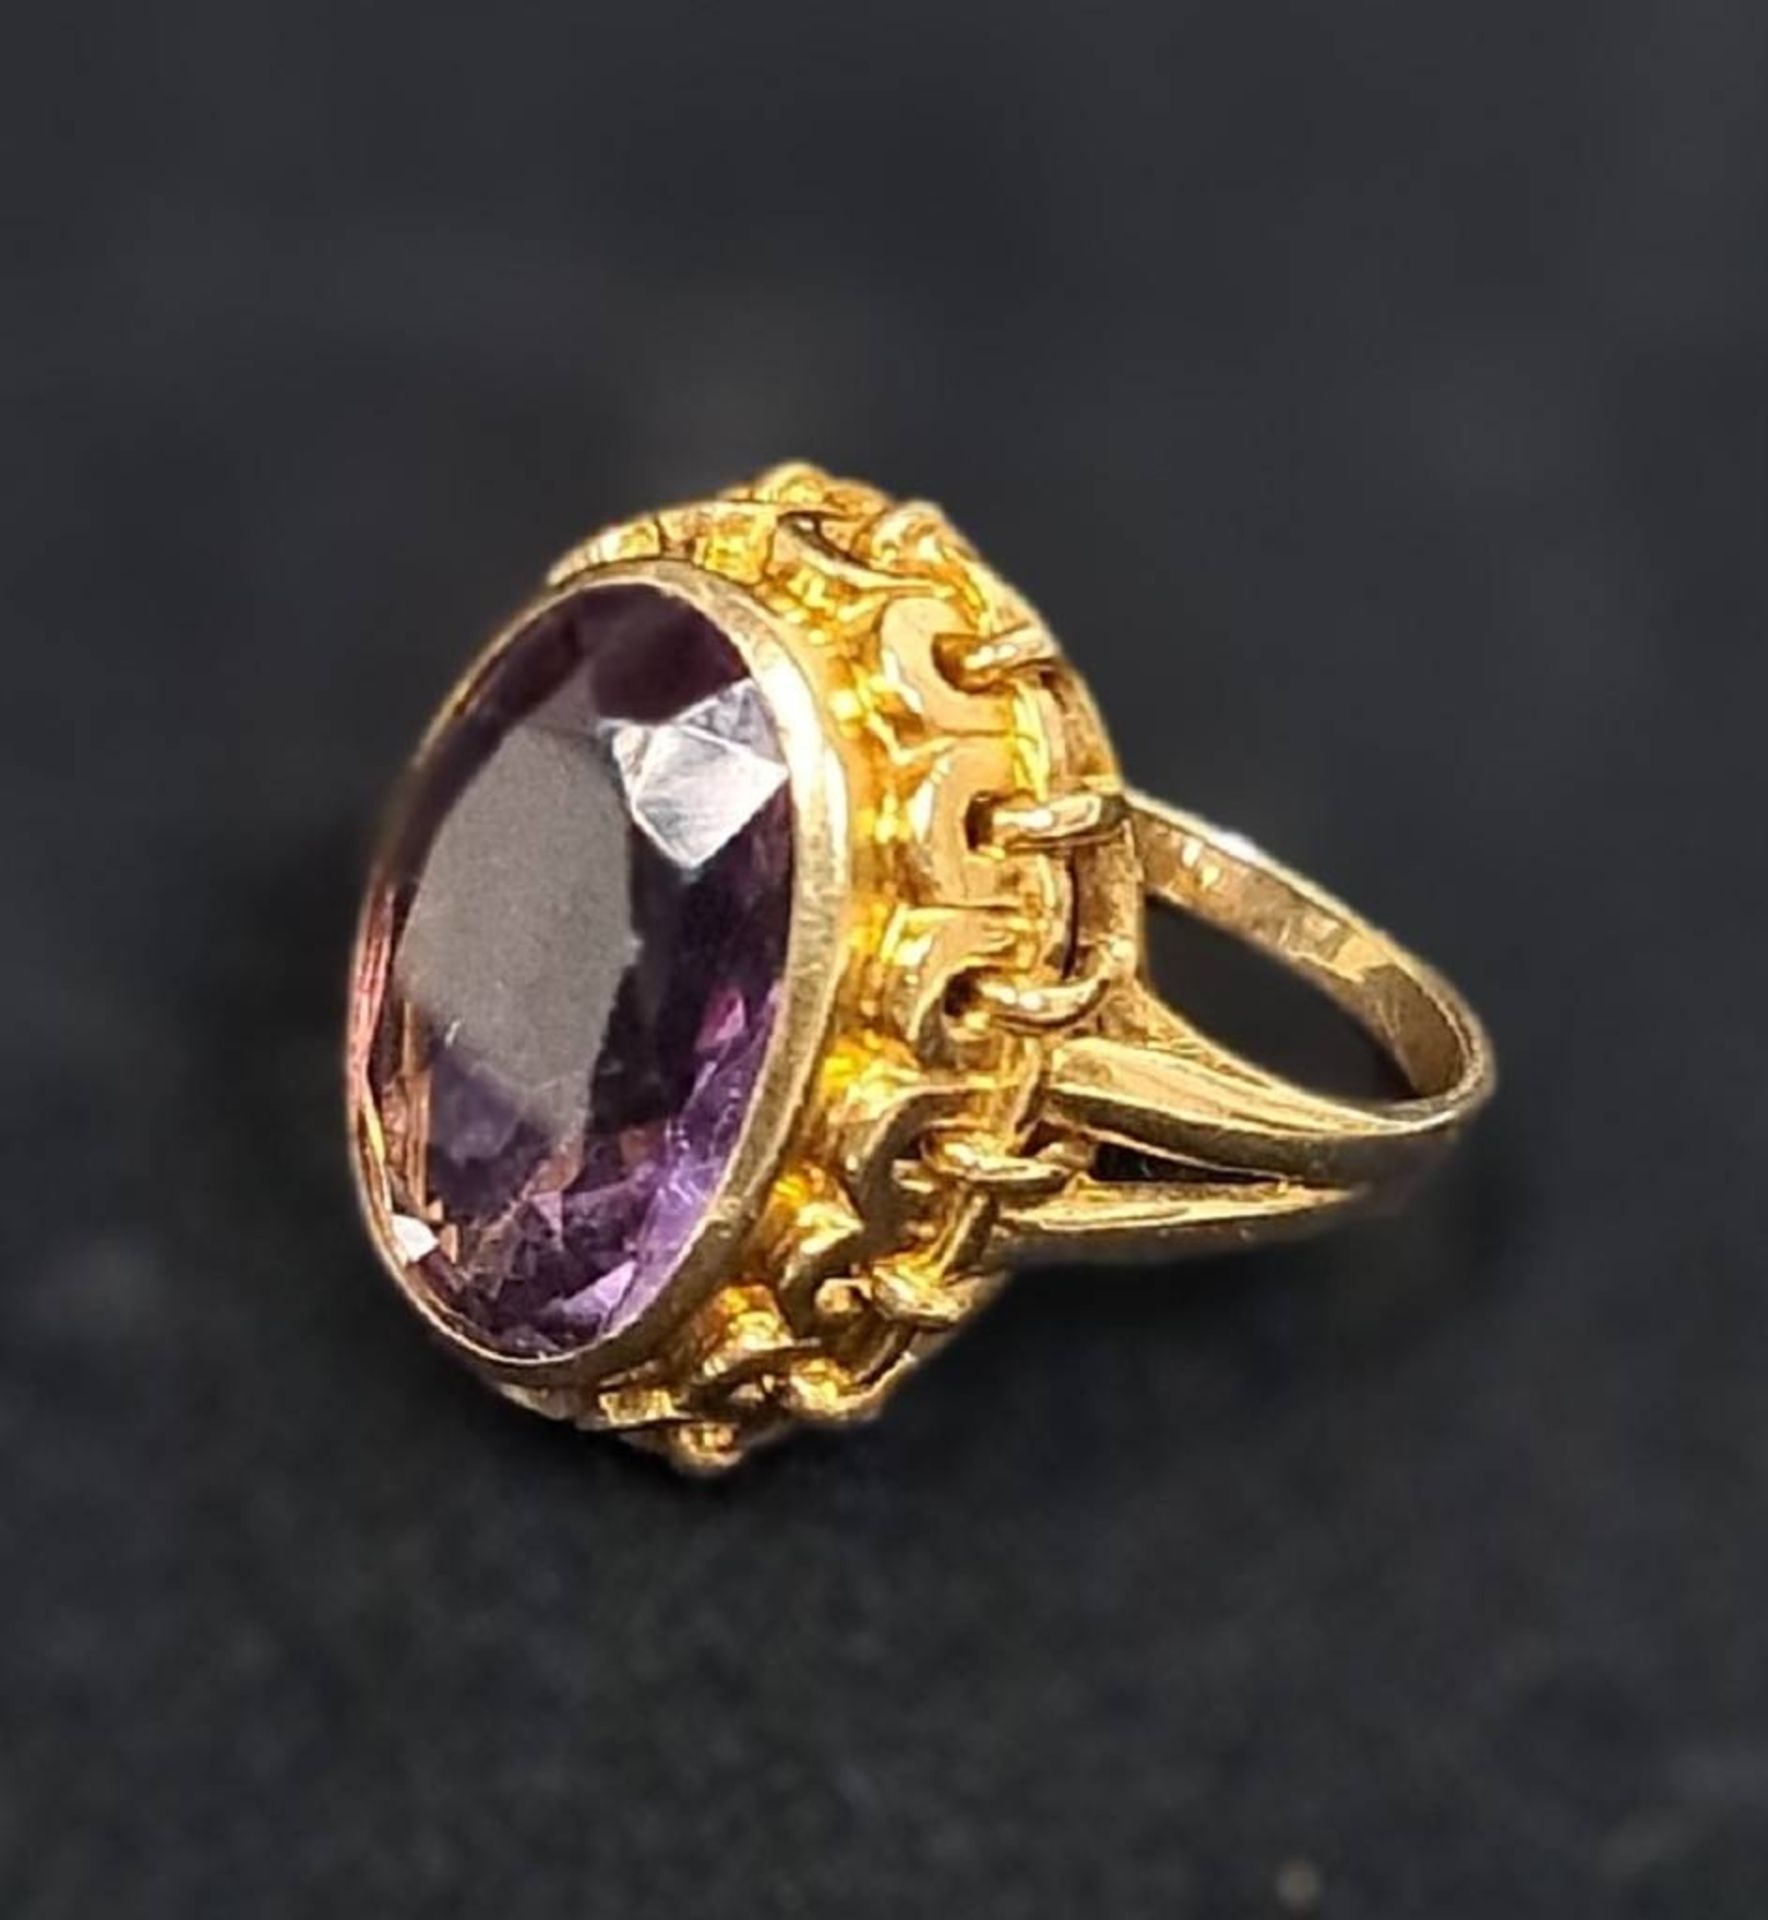 Vintage 585 GG Gold Ring + Amethyst - Image 2 of 4